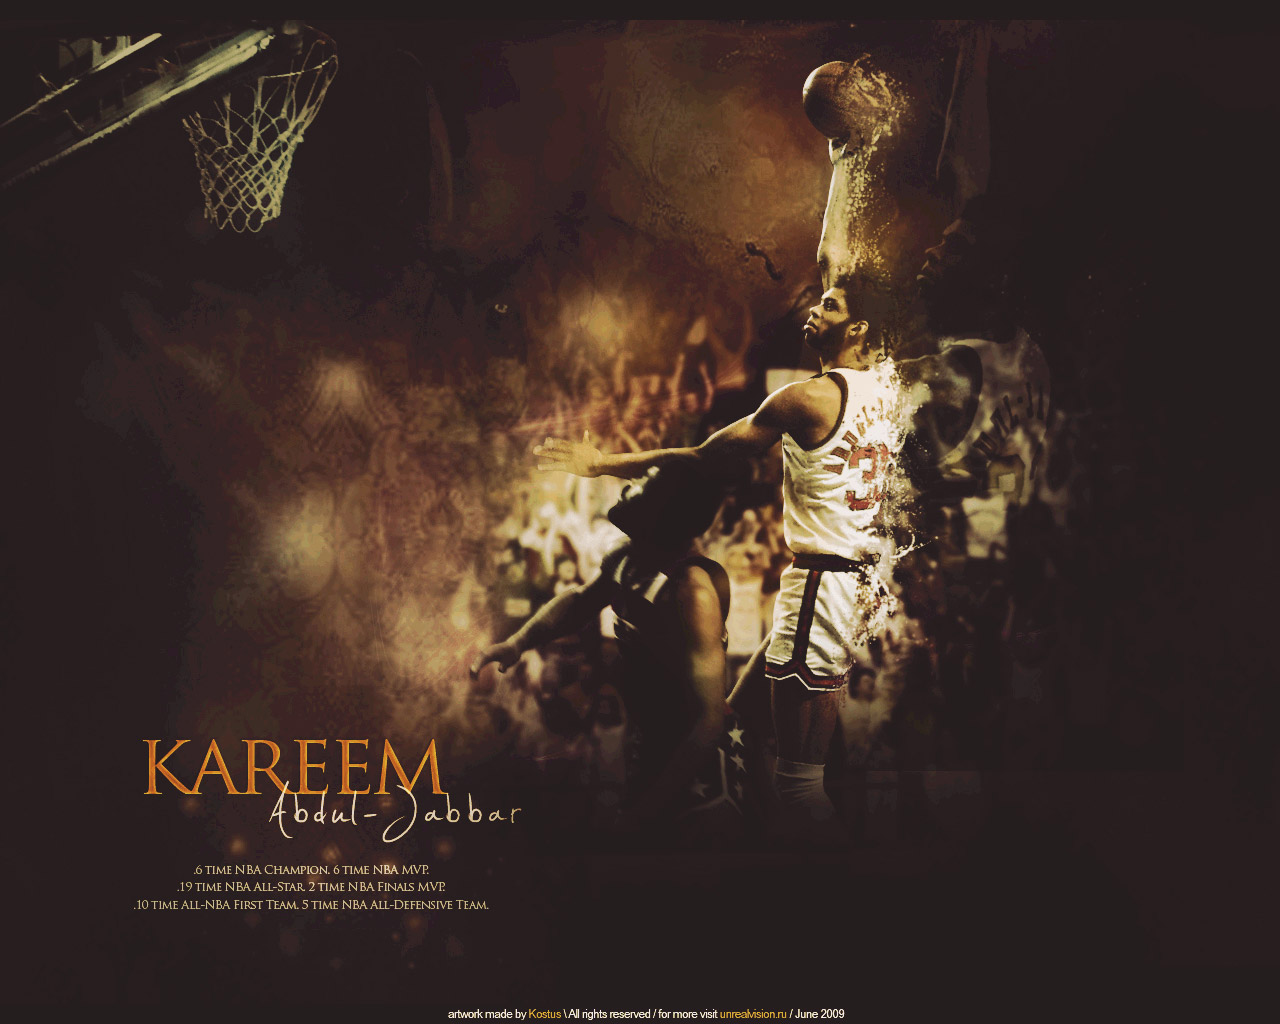 Kareem Abdul-Jabbar - Photo Colection